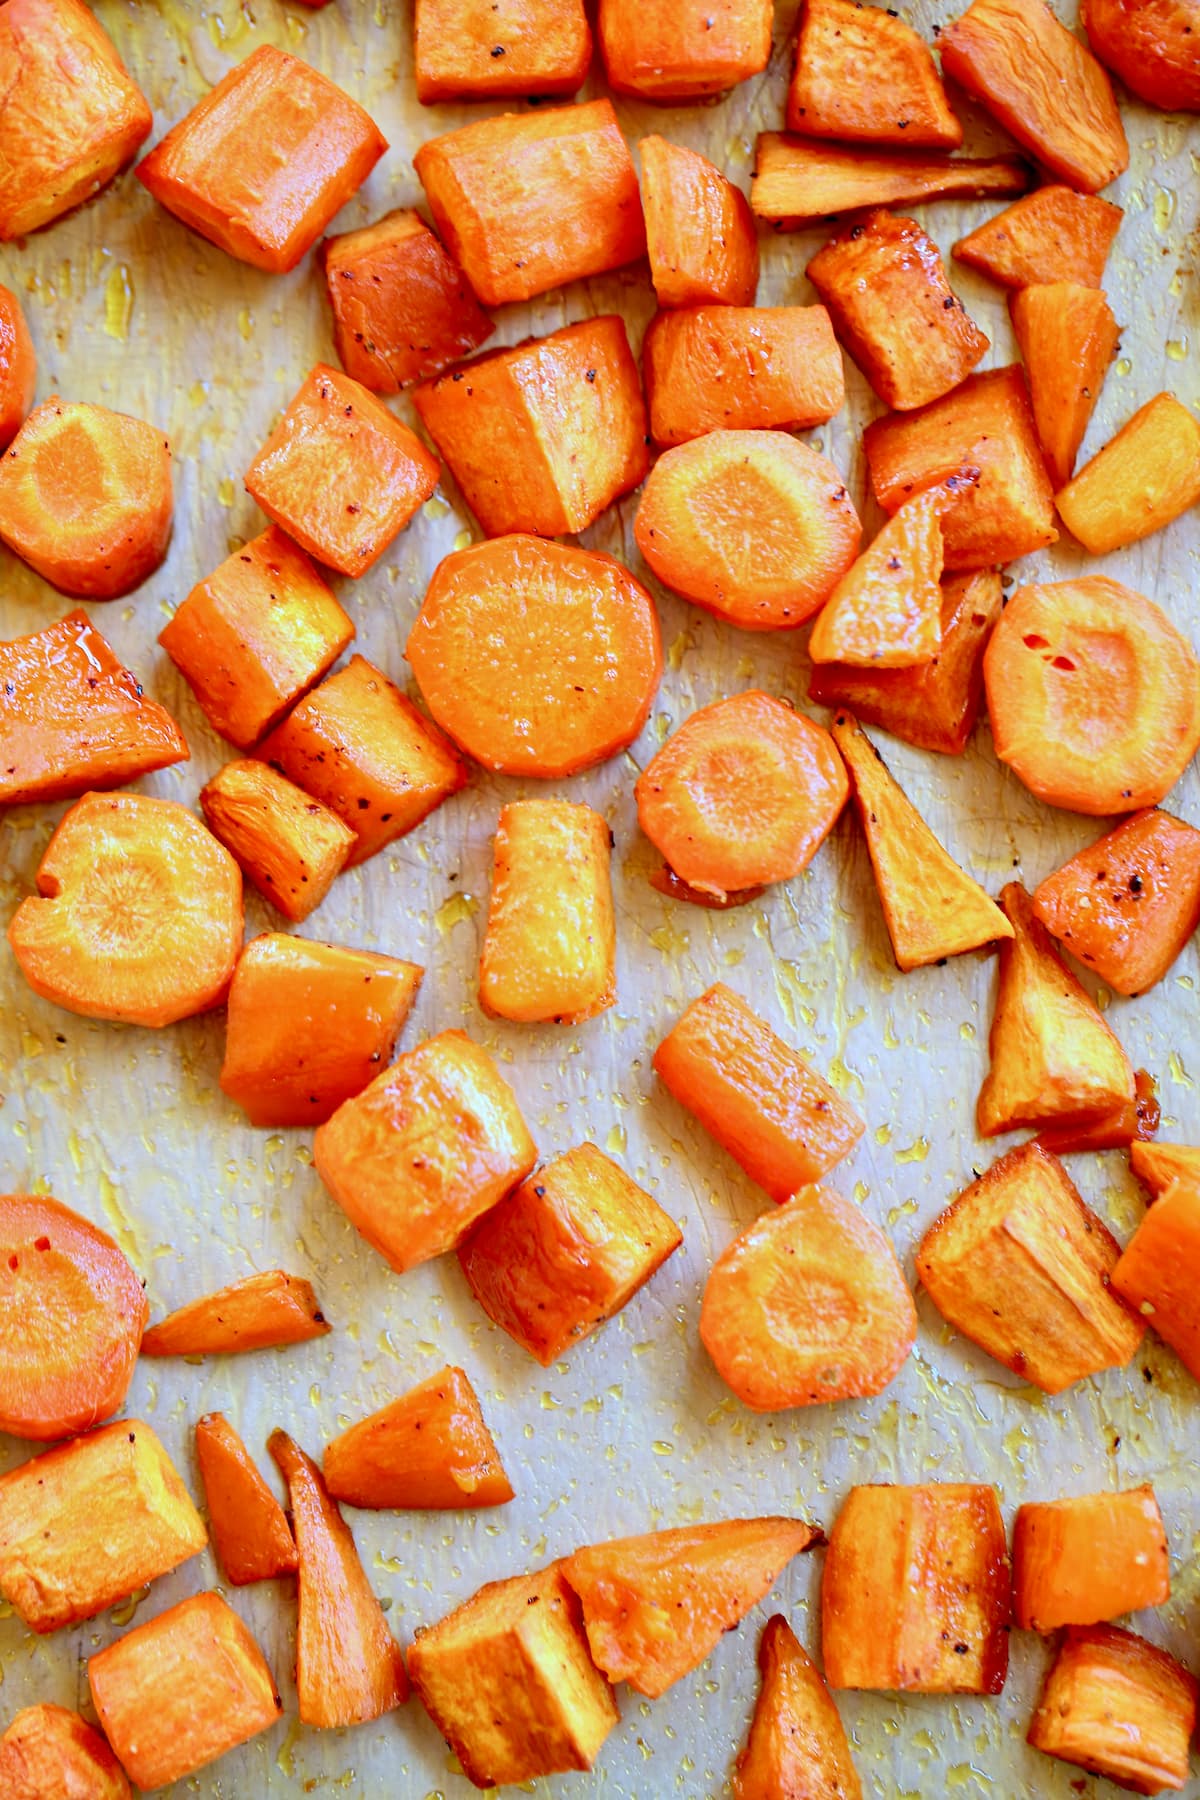 roasted carrots on a baking sheet pan.